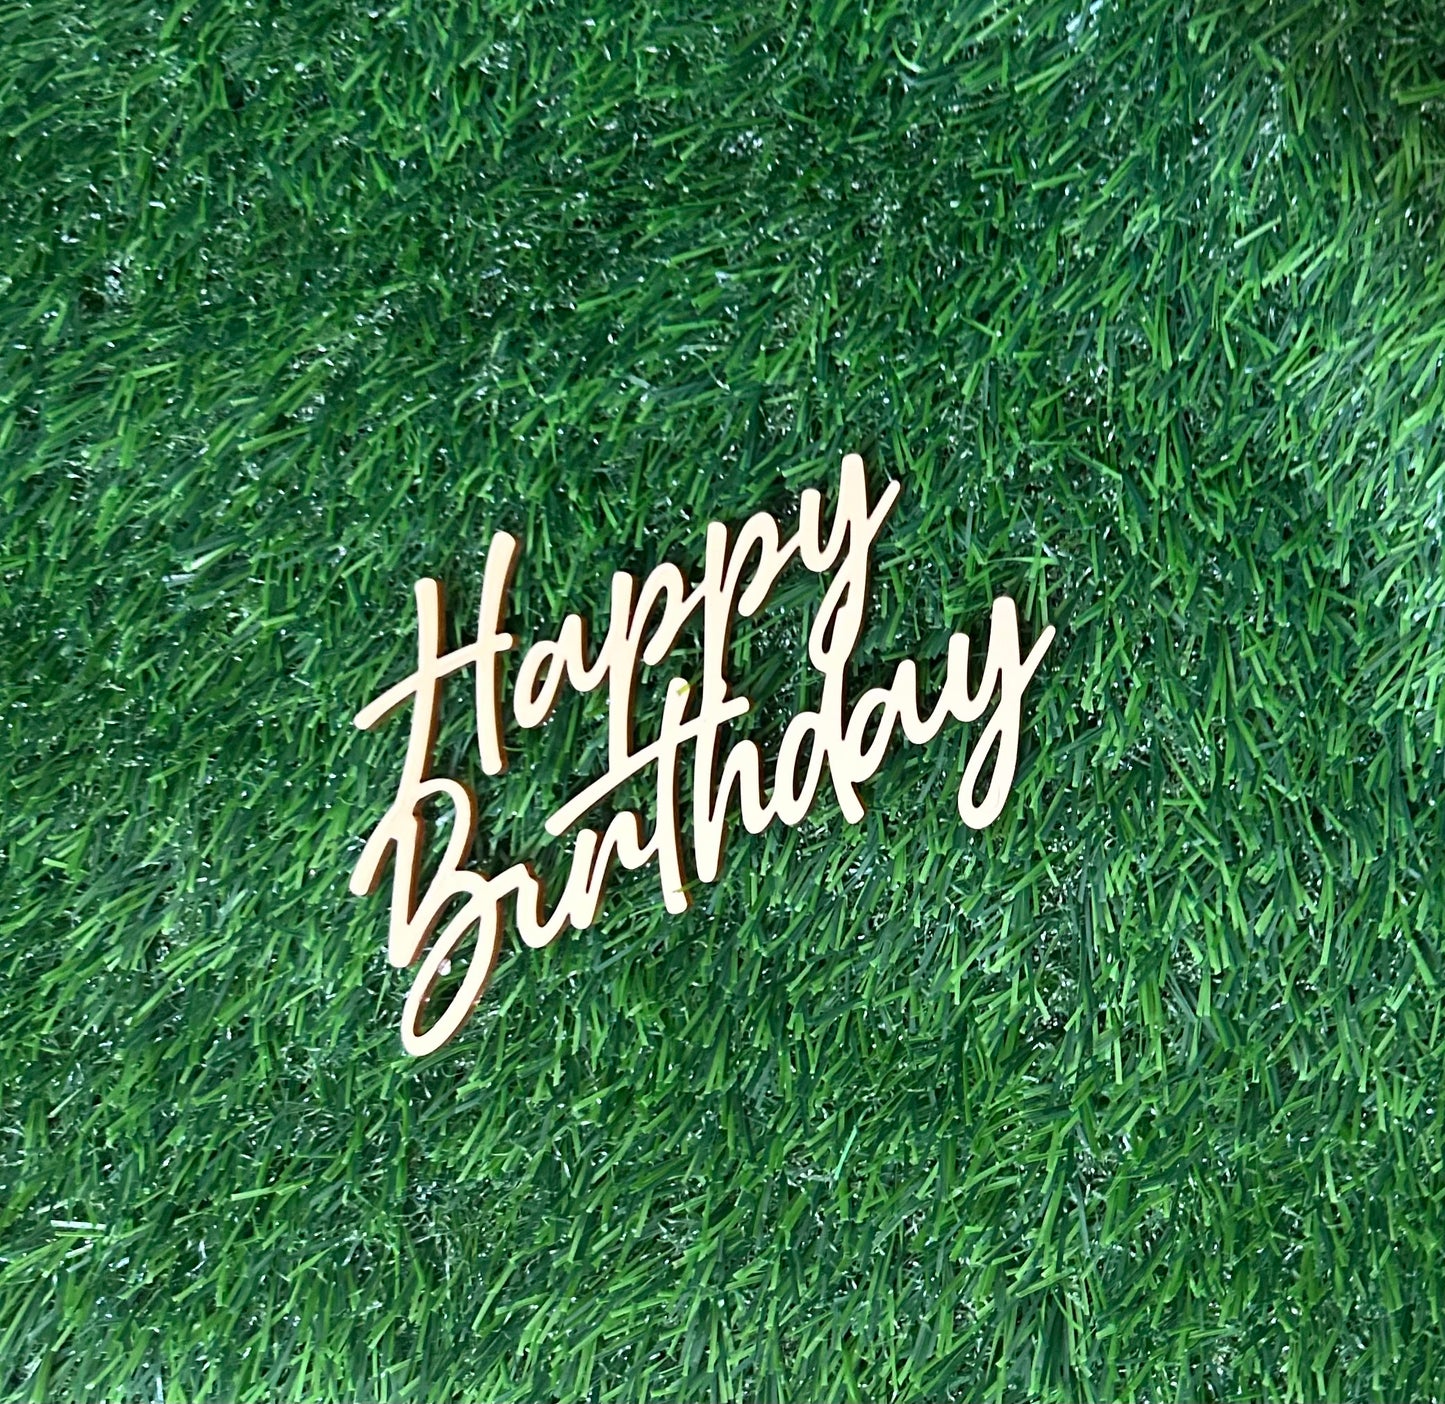 Mirror Acrylic Happy Birthday (w/ out stick) Cake Topper